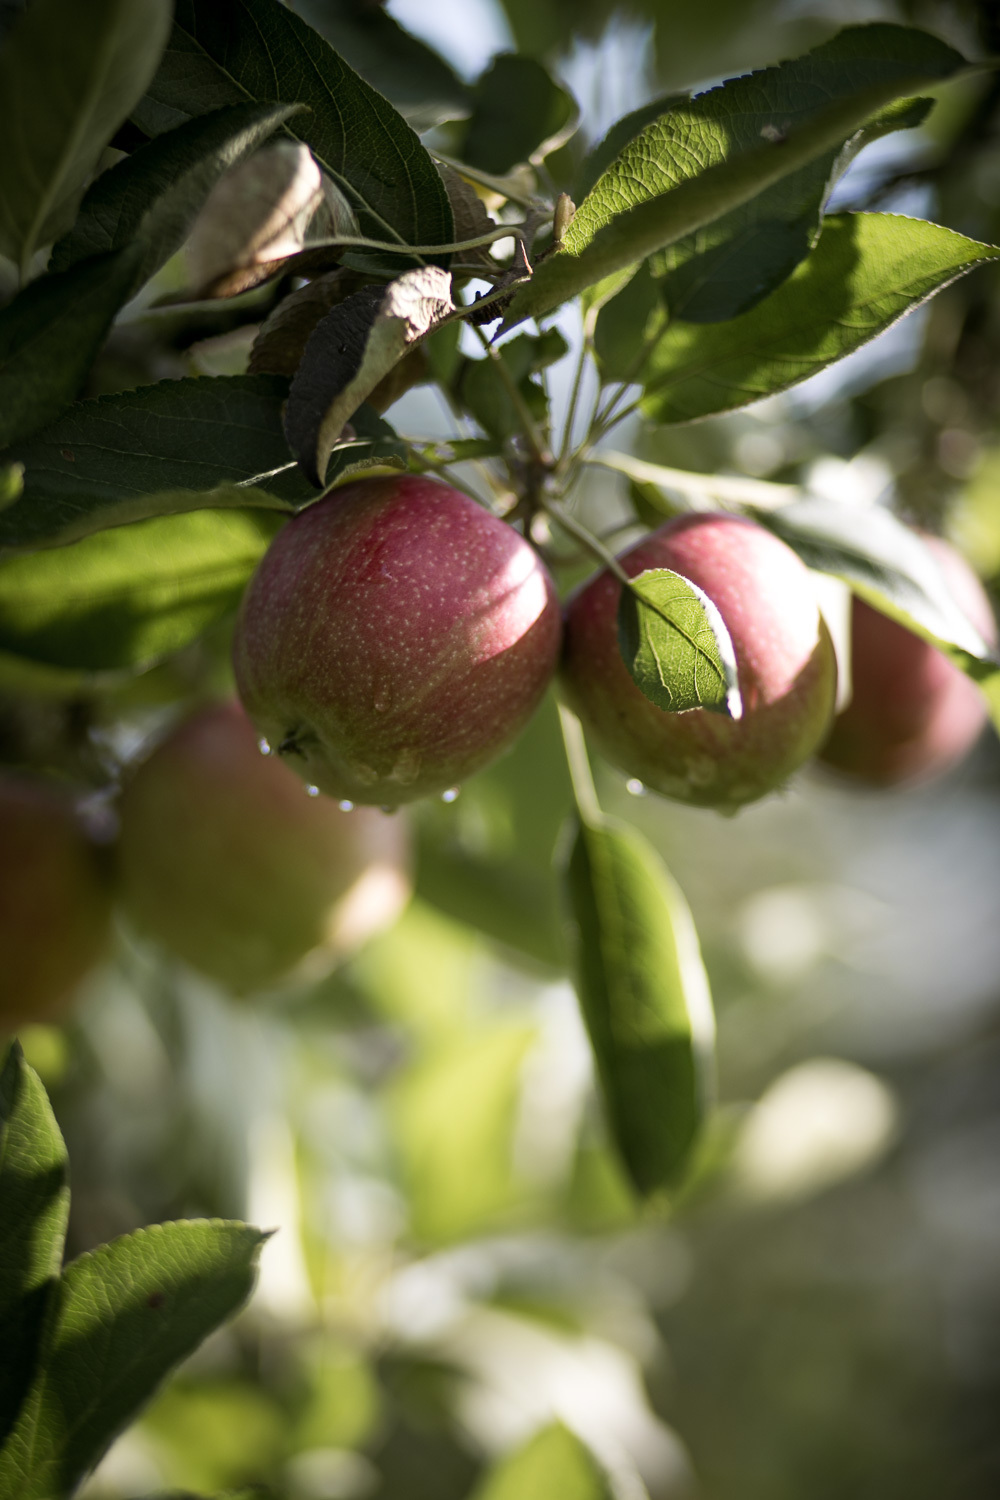 Organic Golden Delicious Apples Biosüdtirol - Organic apples from South  Tyrol